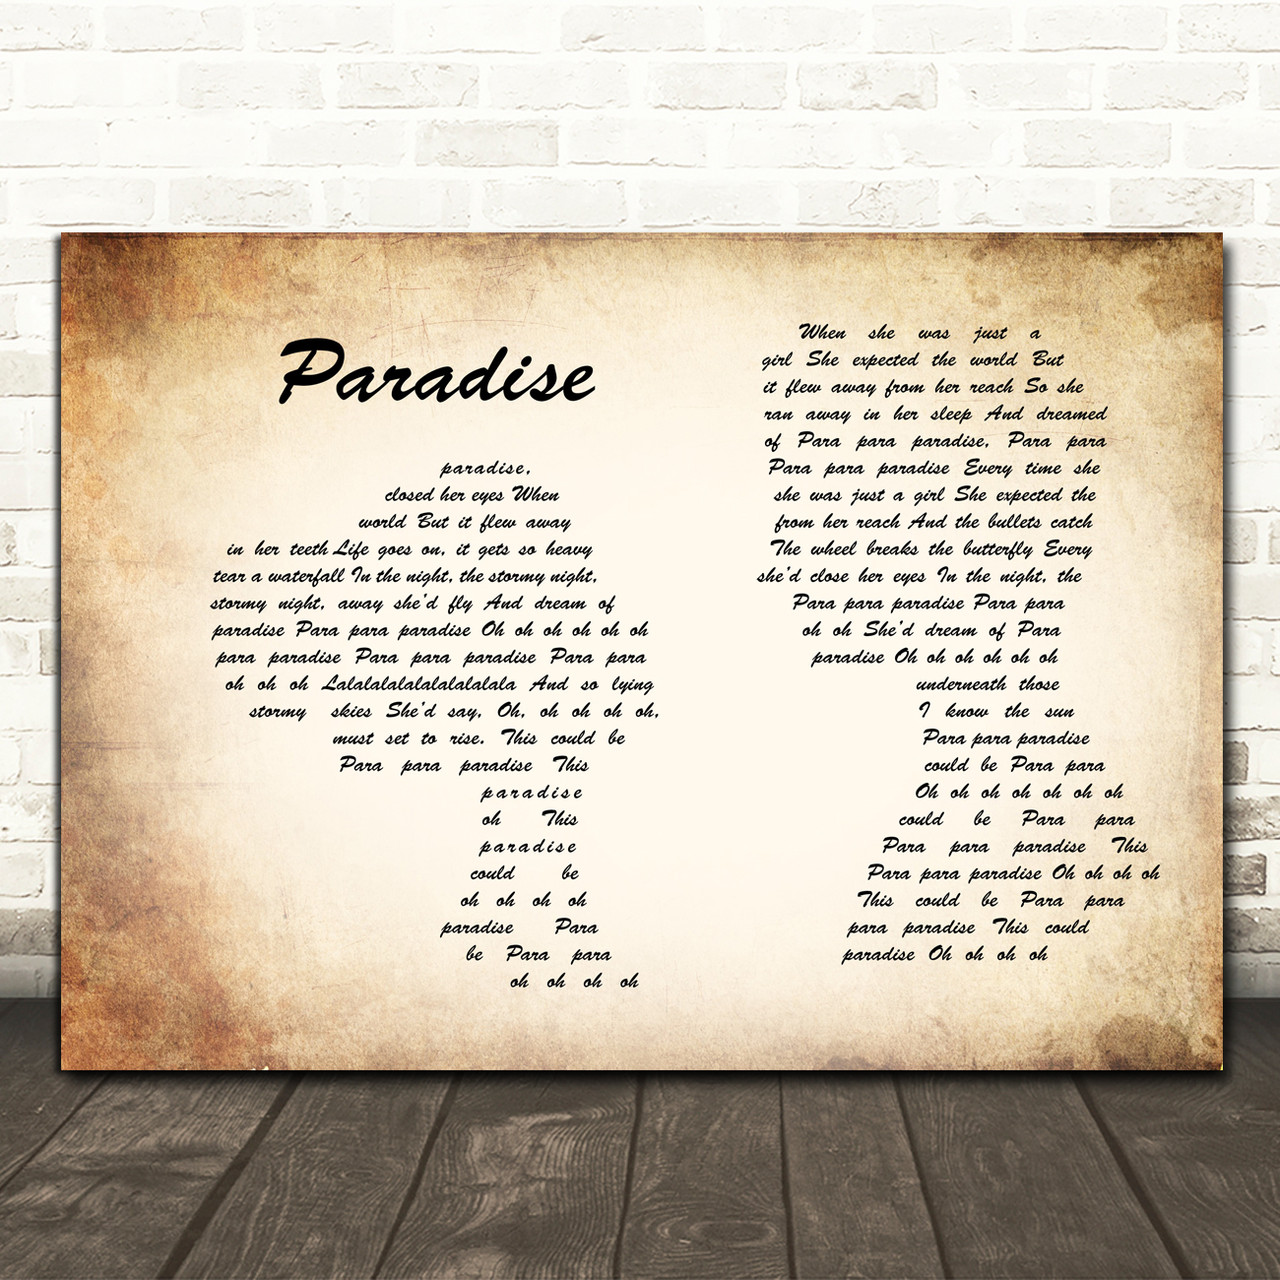 Coldplay - Paradise Lyrics